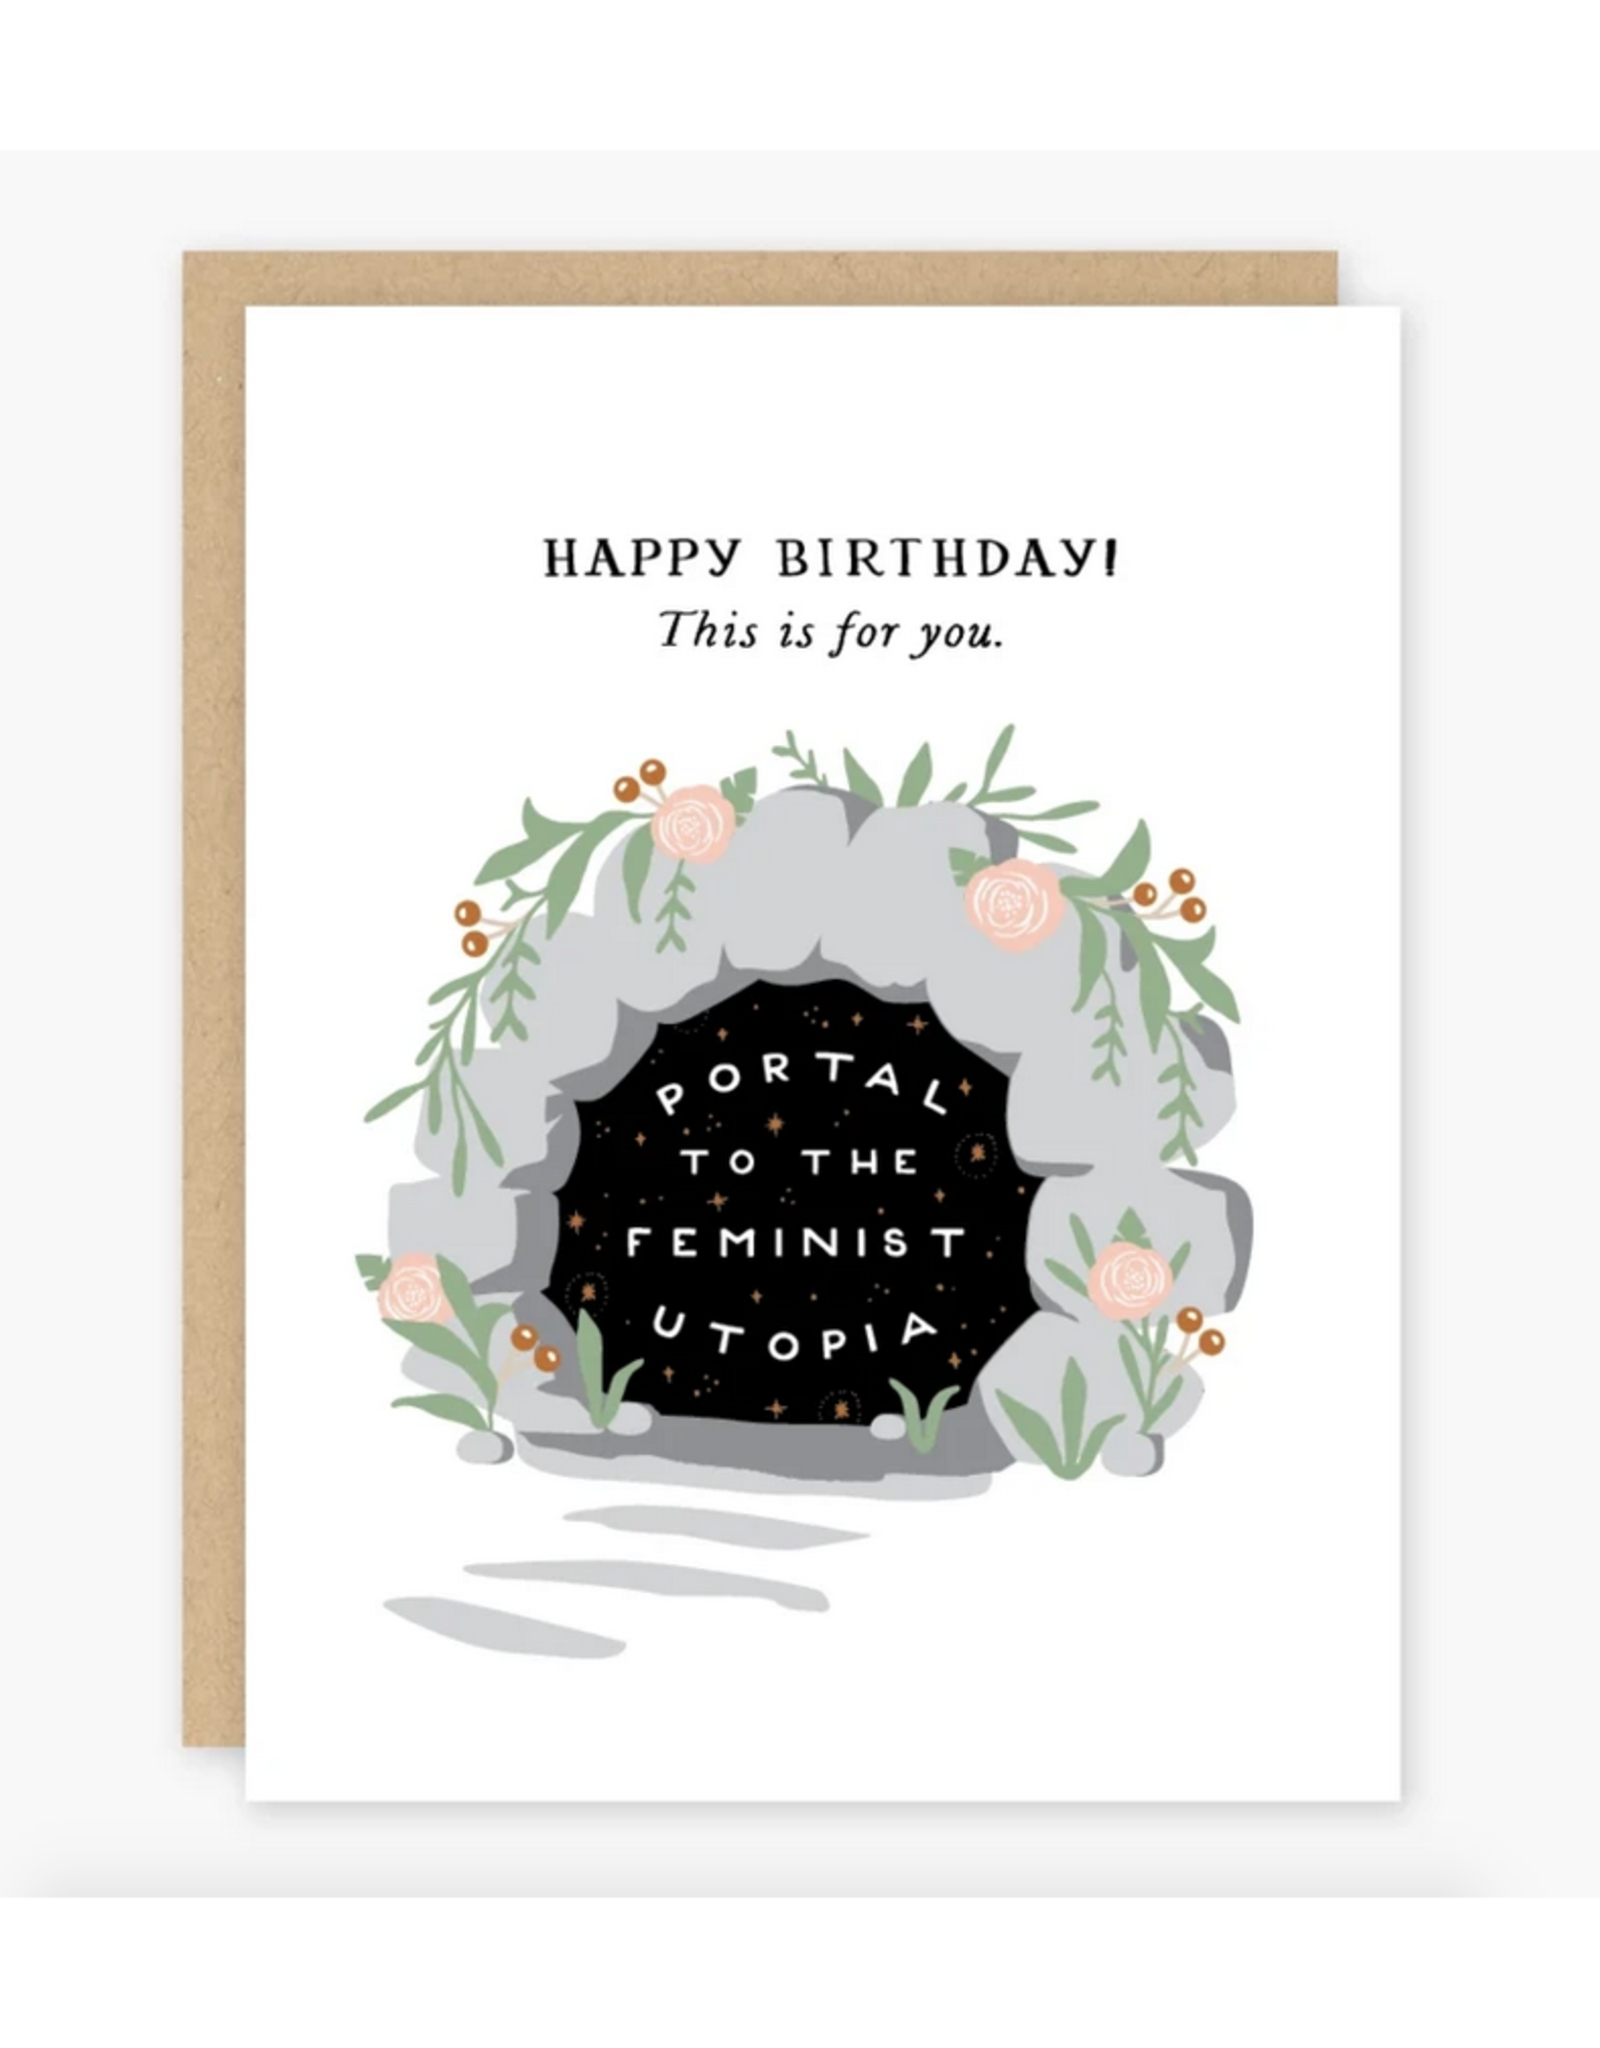 Happy Birthday Portal to the Feminist Utopia Greeting Card